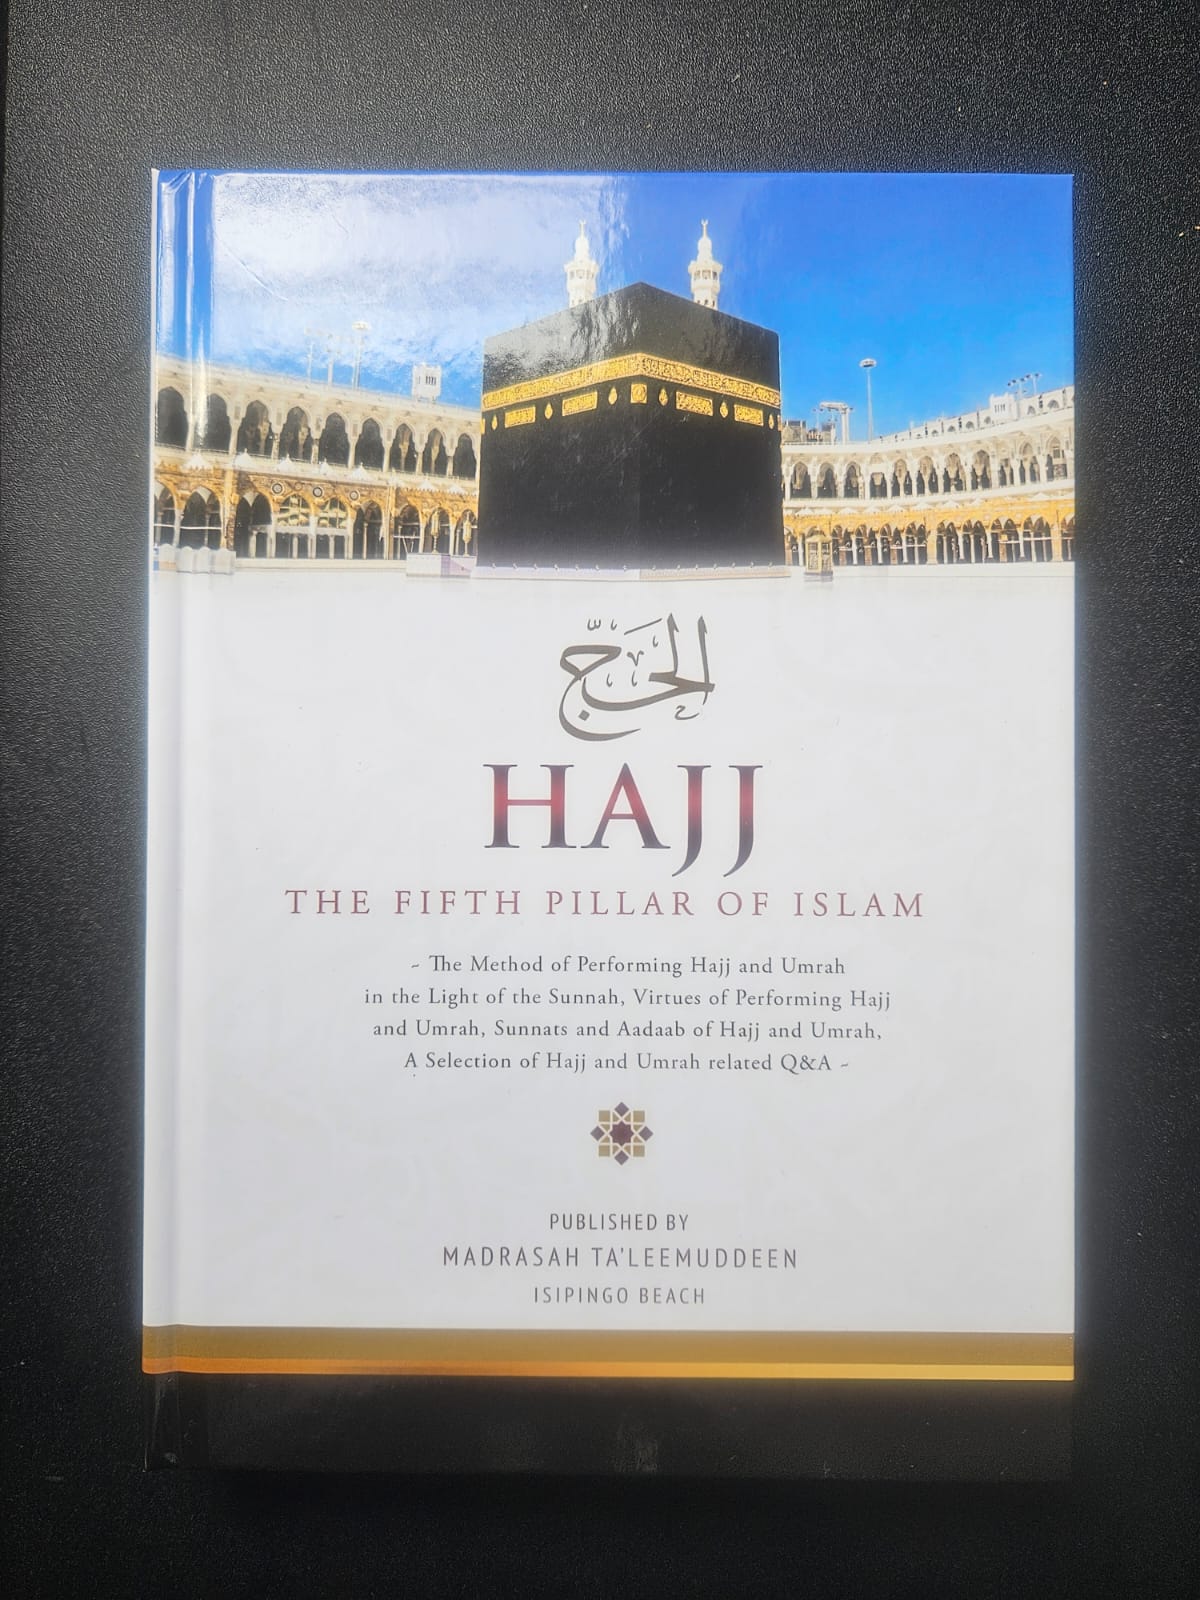 HAJJ The Fifth Pillar of Islam gepubliseer deur Madrasah Taleemuddeen Isipingo